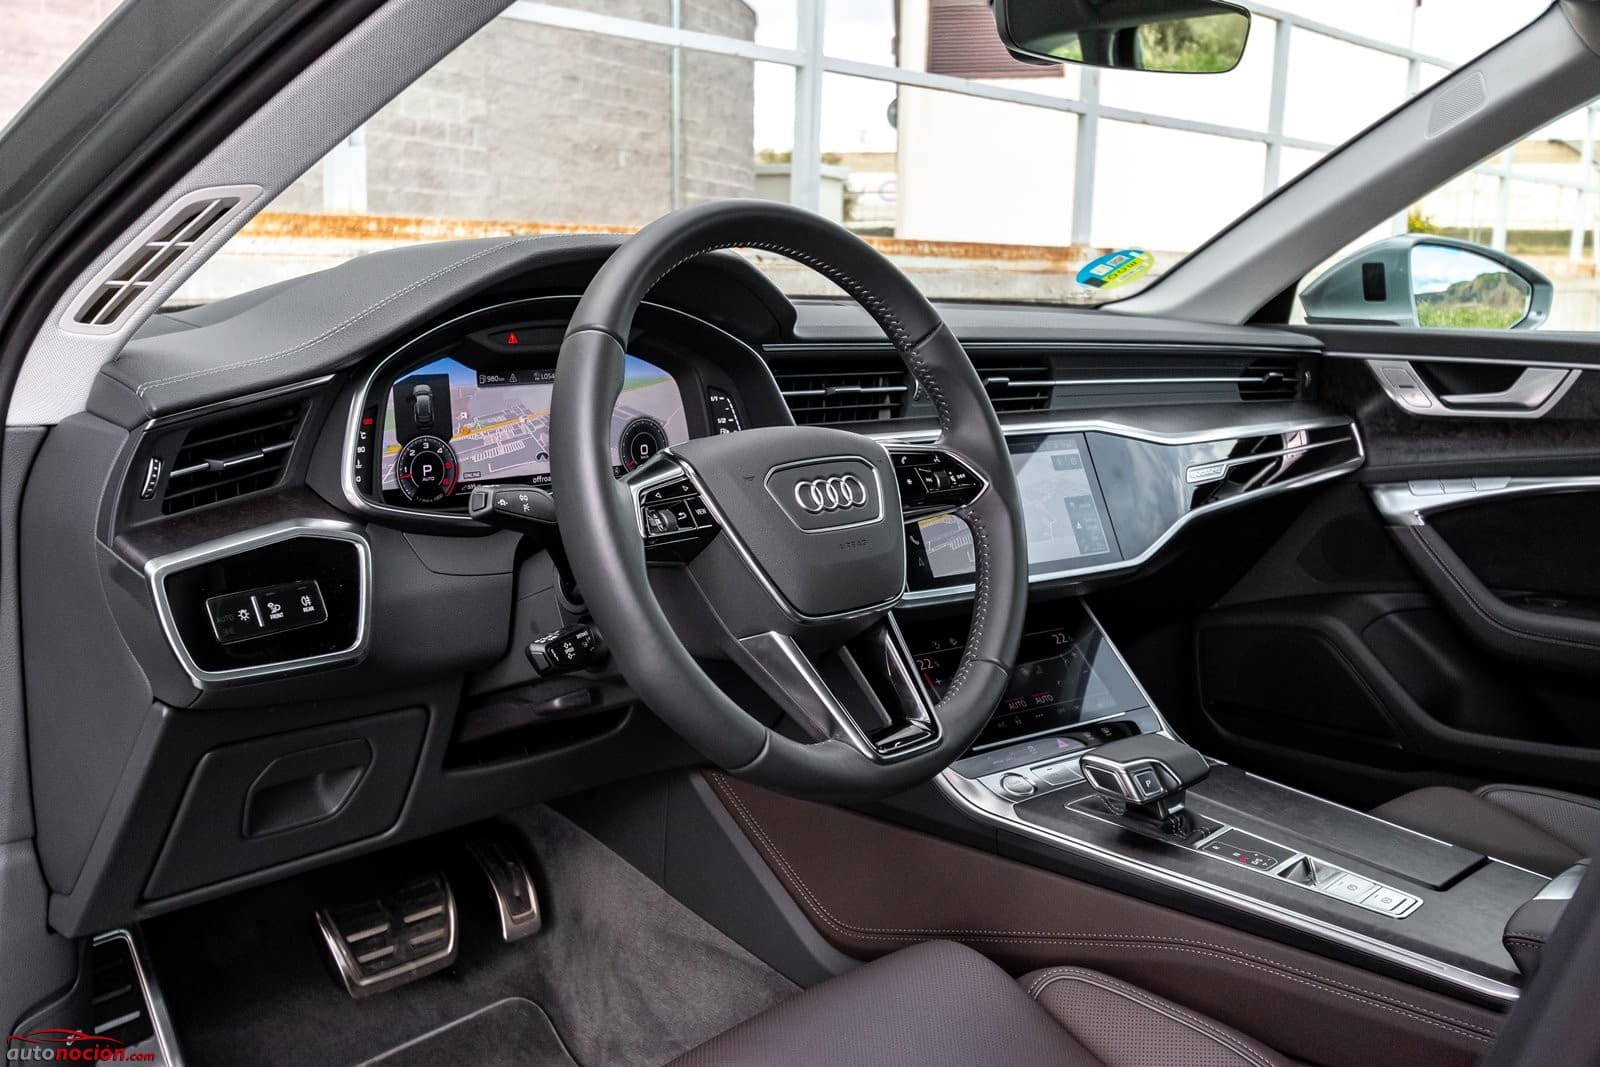 https://www.autonocion.com/wp-content/uploads/2020/04/Prueba-Audi-A6-allroad-quattro-45-TDI-tiptronic-2020-47.jpg